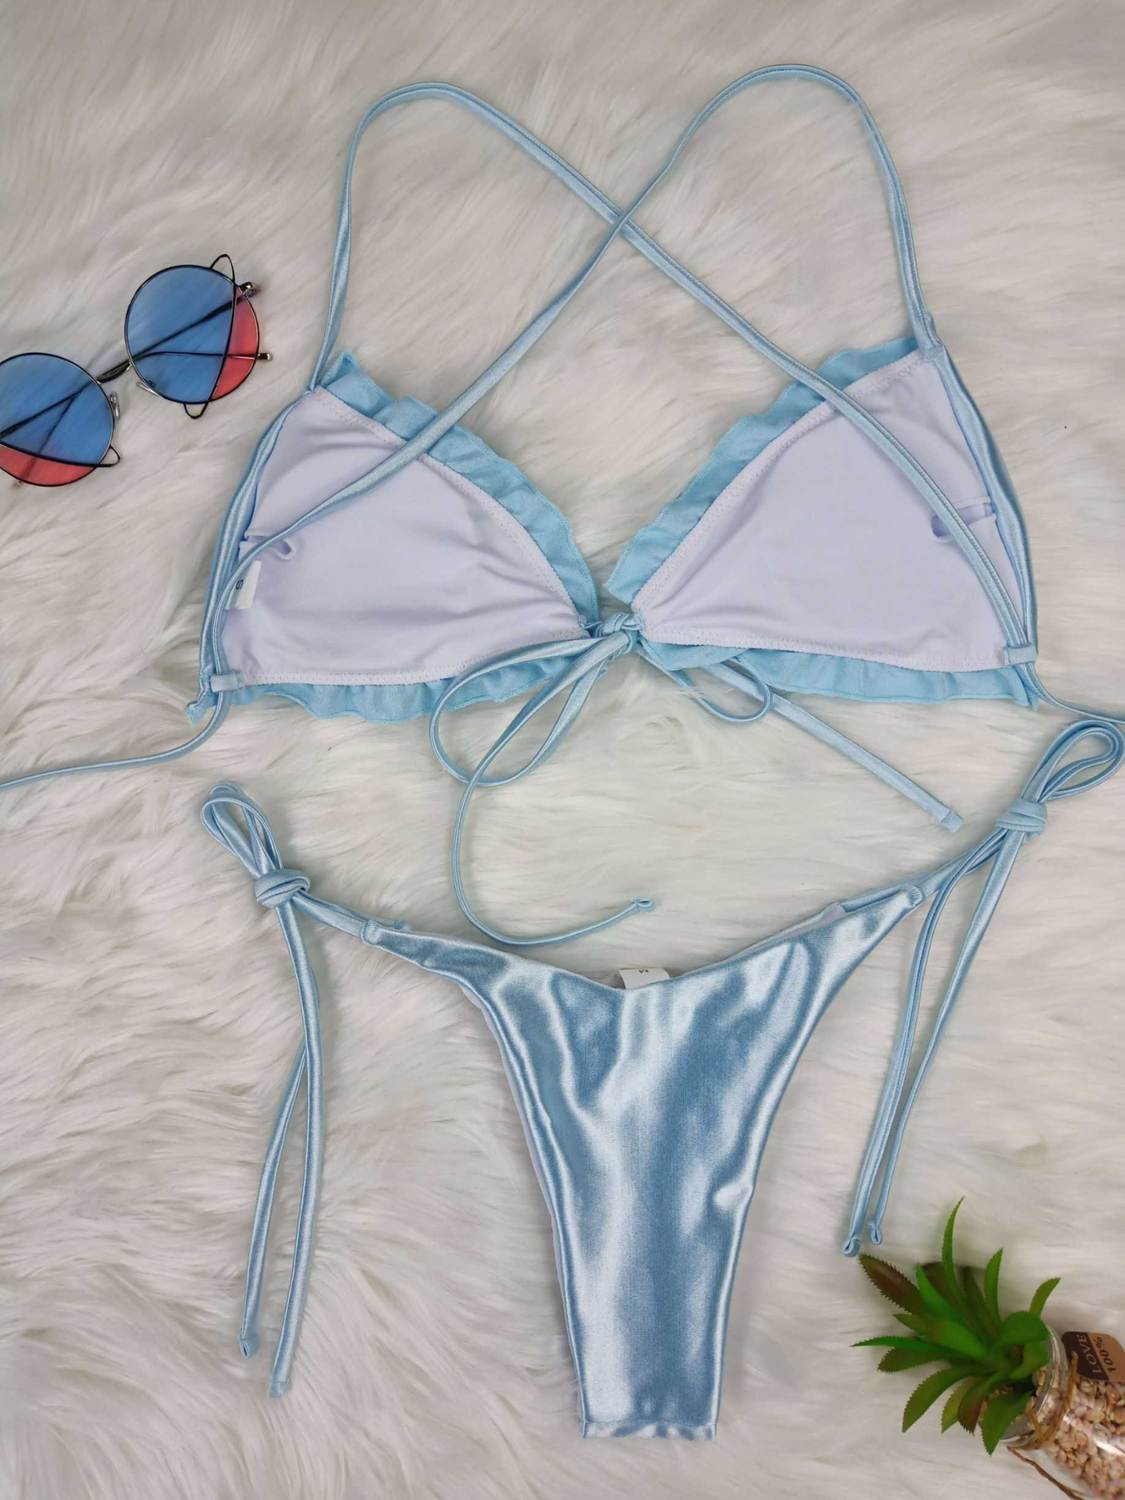 String Bikini Bathing Suits Wholesale 15